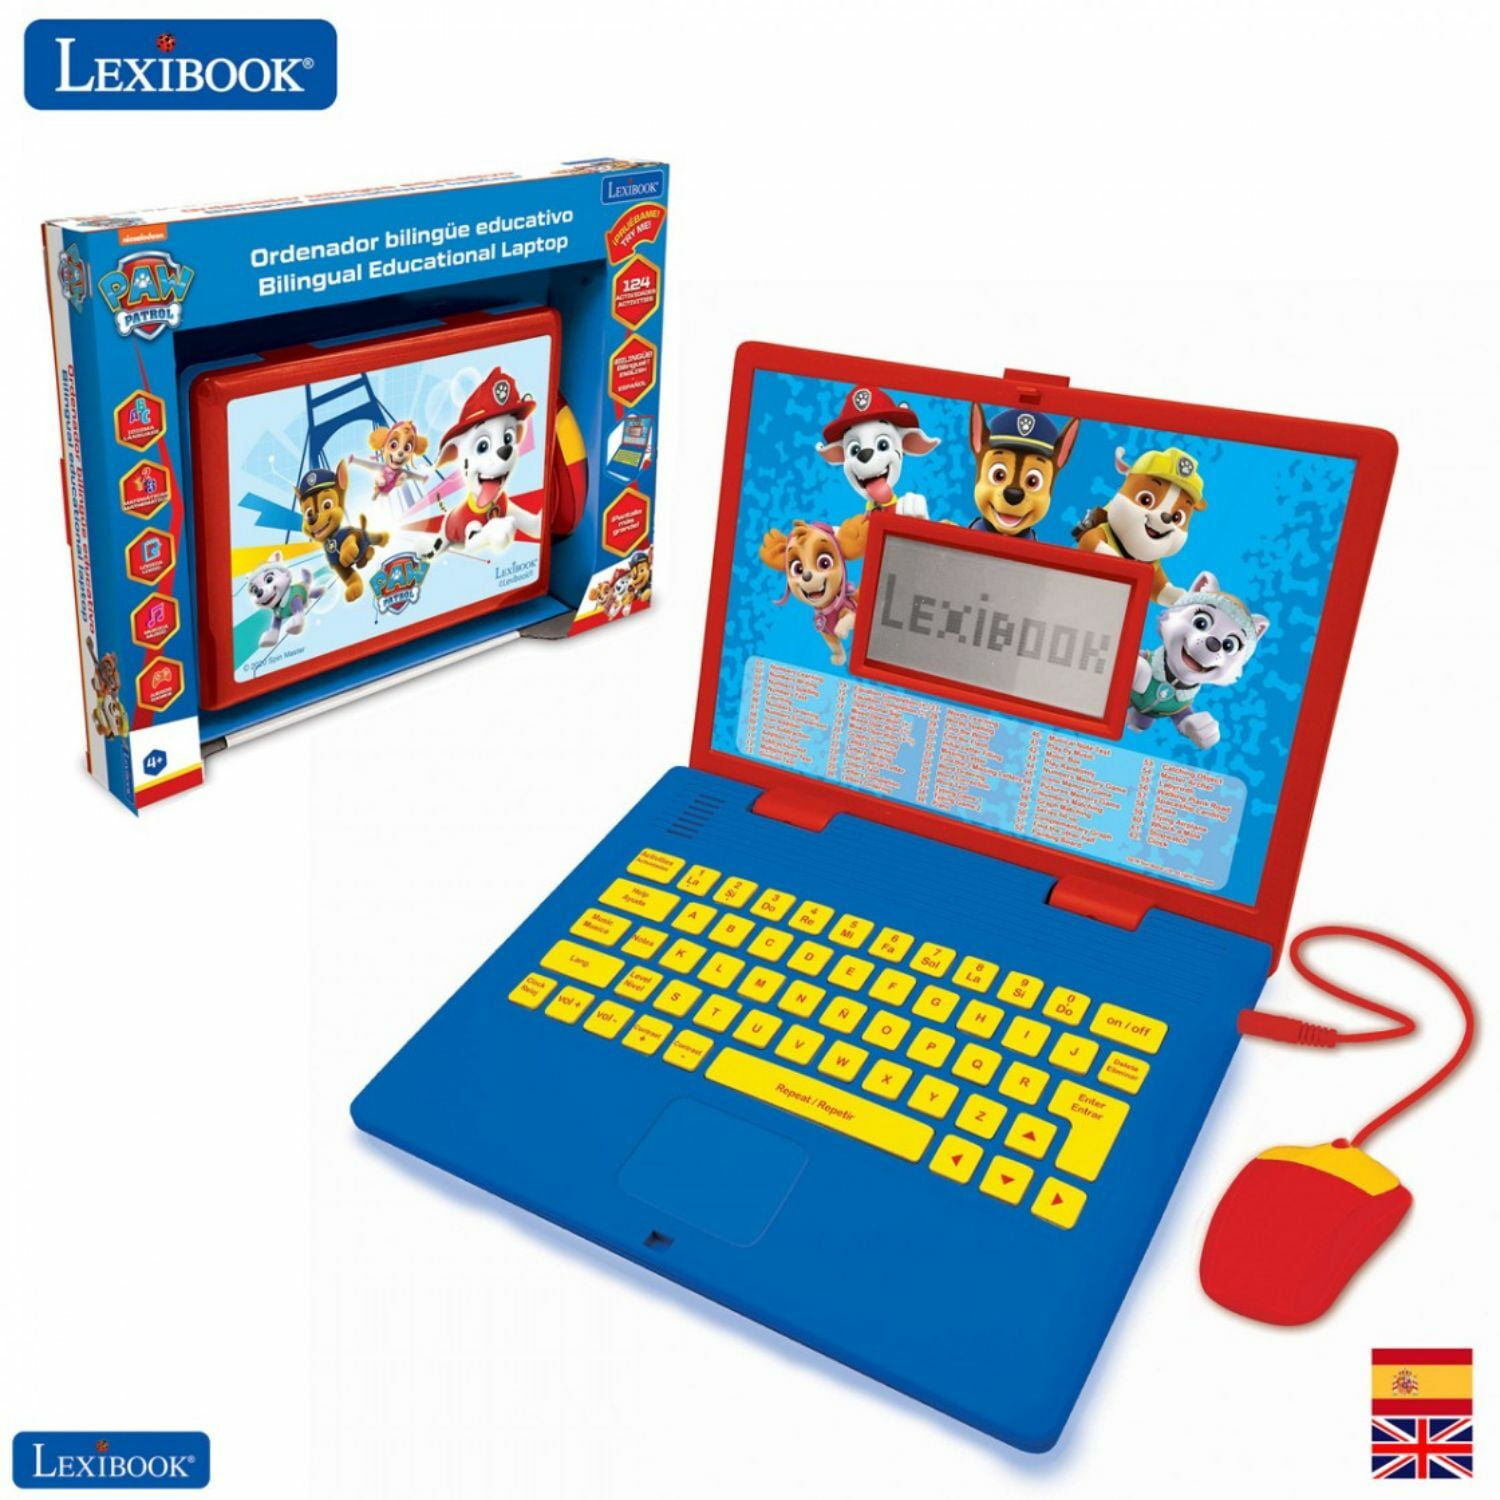 Lexibook Paw Patrol Educational and Bilingual Laptop Spanish/English 